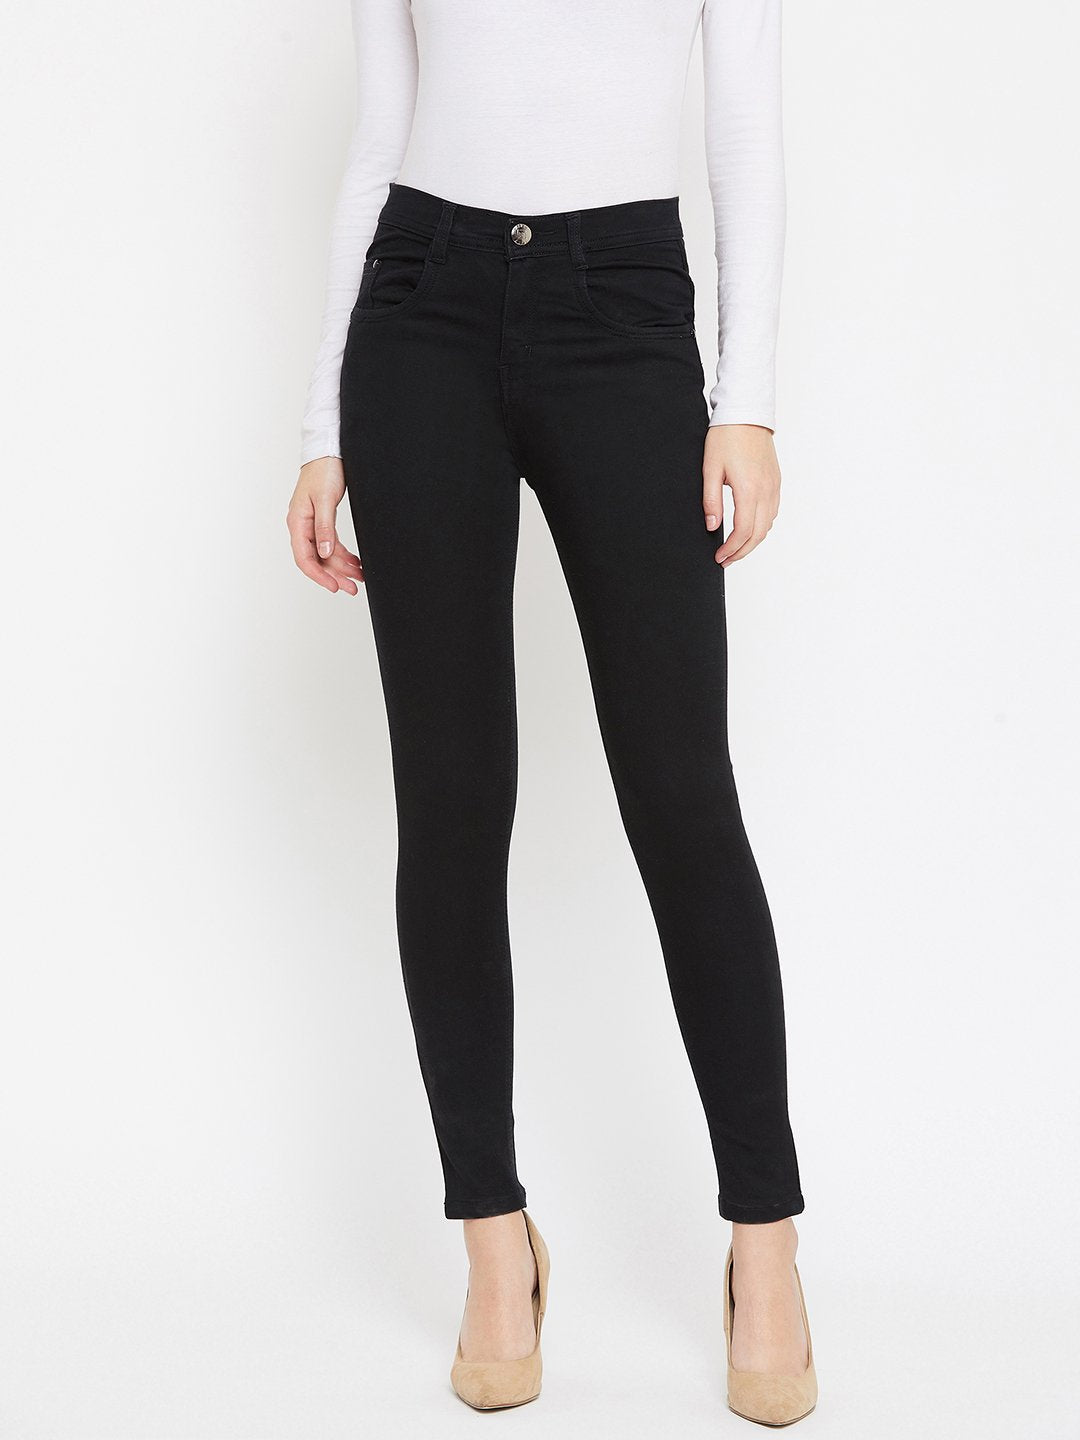 High Waist Stretchable Black Jeans - NiftyJeans